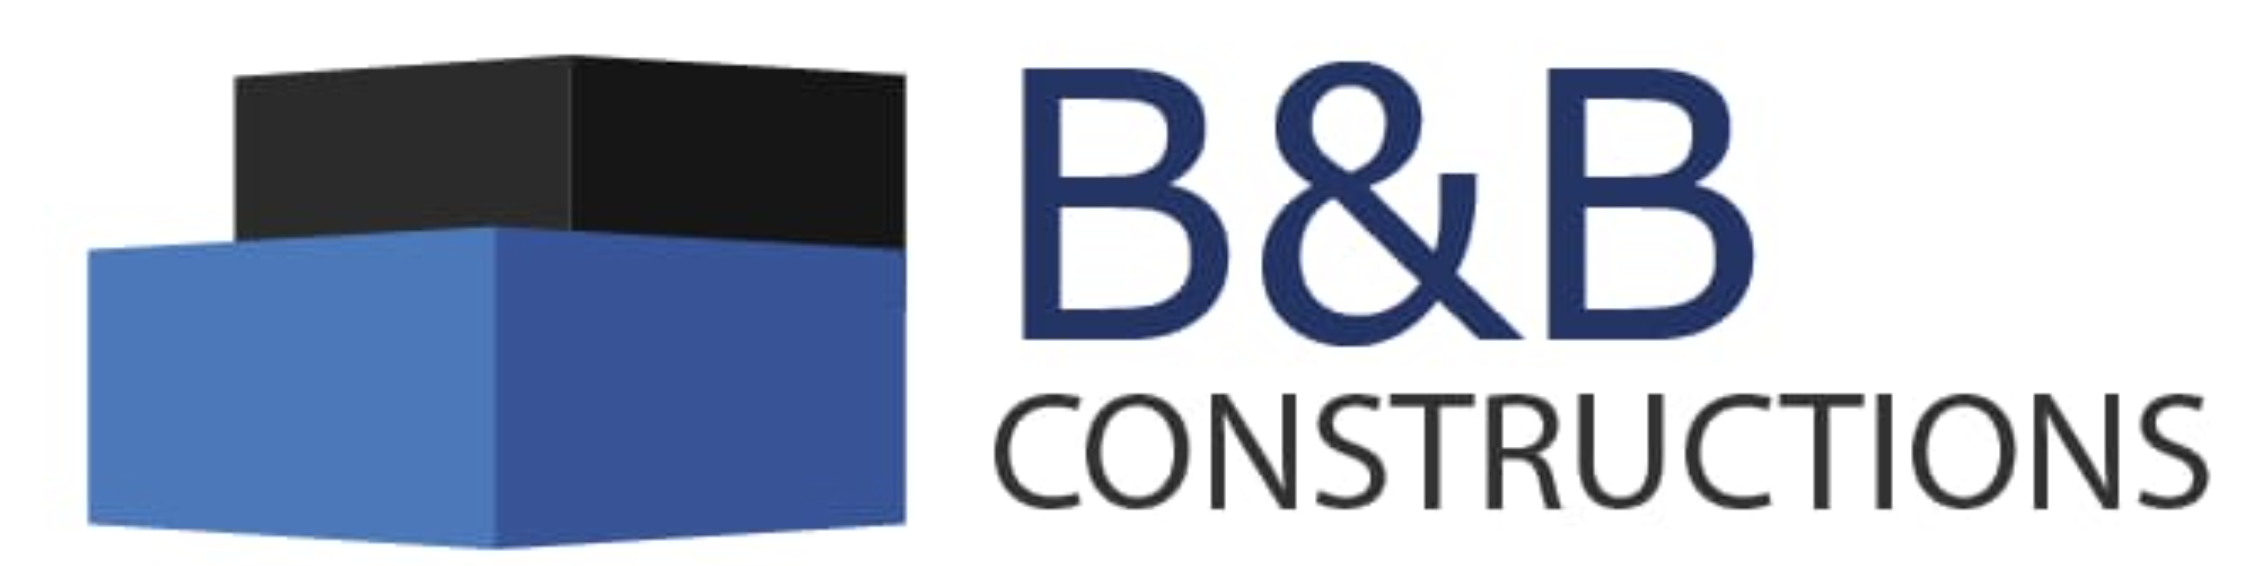 B&B constructions